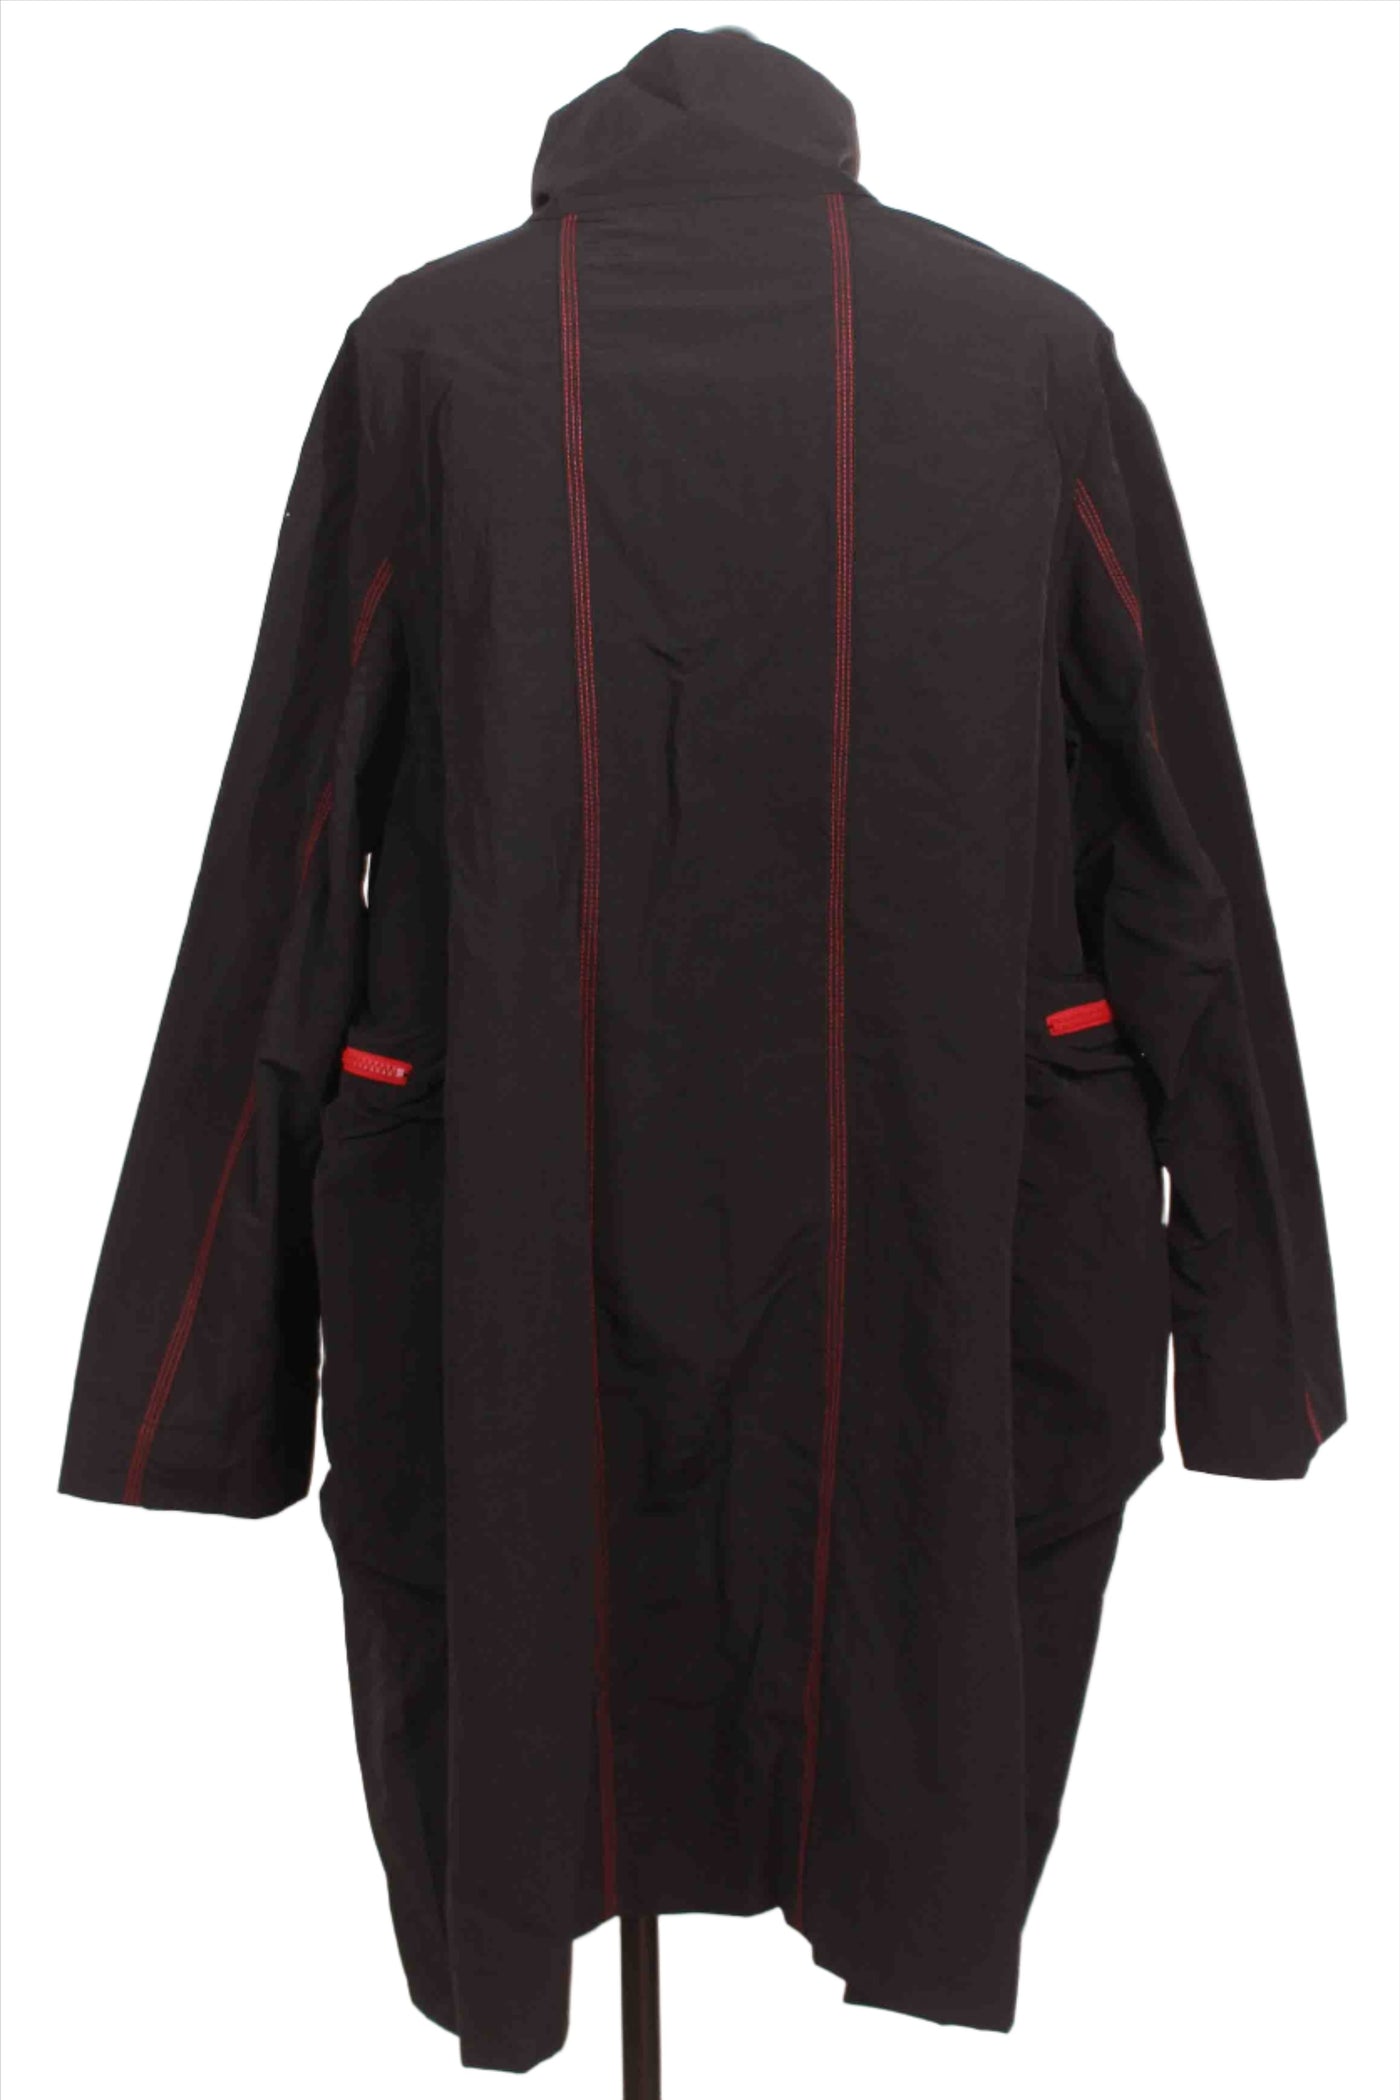 back view of Red Zippered Nylon Black Coat by Moyuru